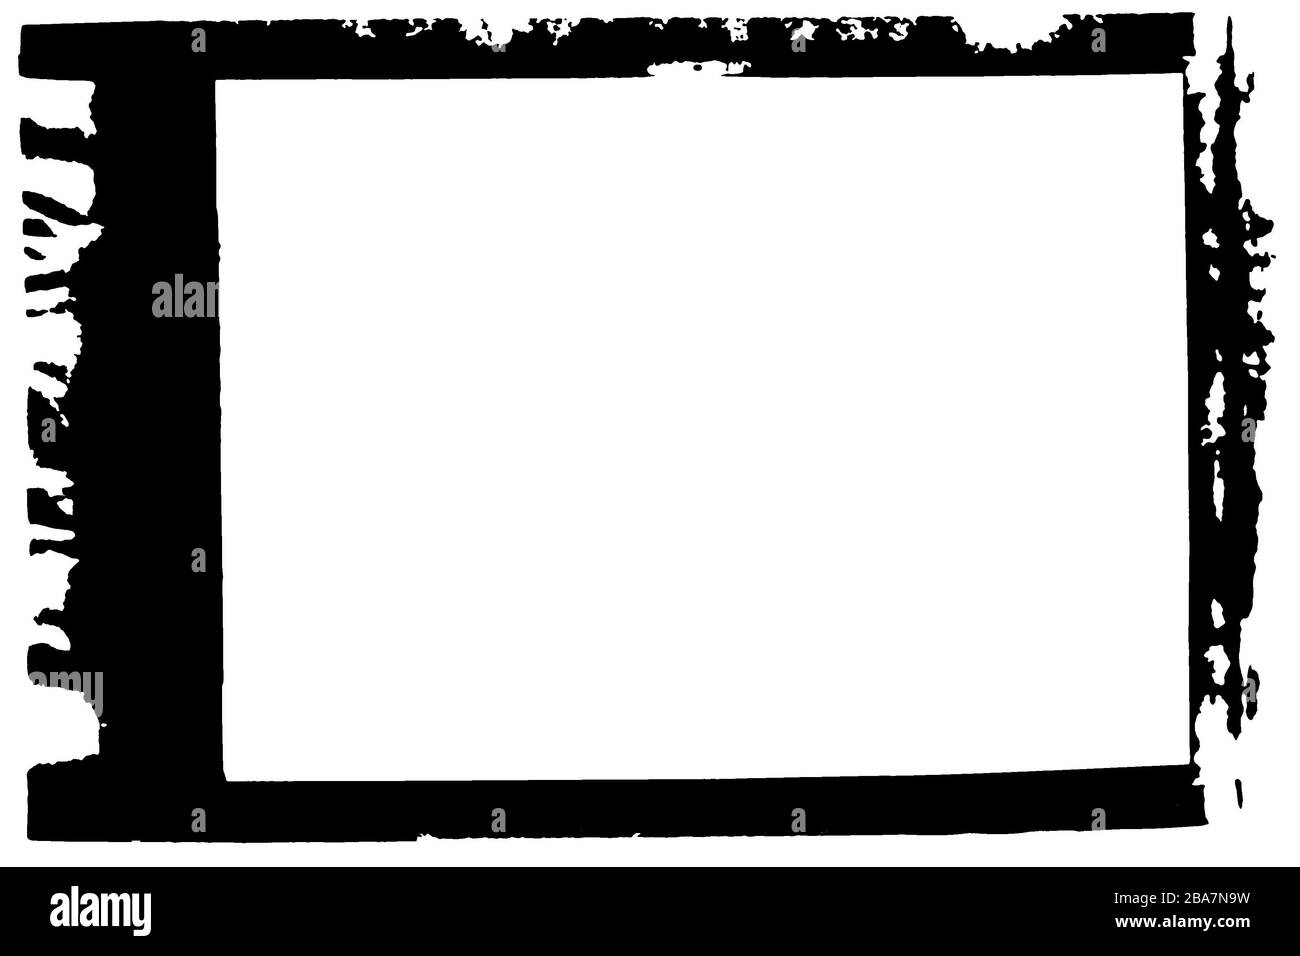 Borde decorativo blanco y negro abstracto. Escriba texto dentro, utilice como superposición o para capa / Máscara de recorte Foto de stock